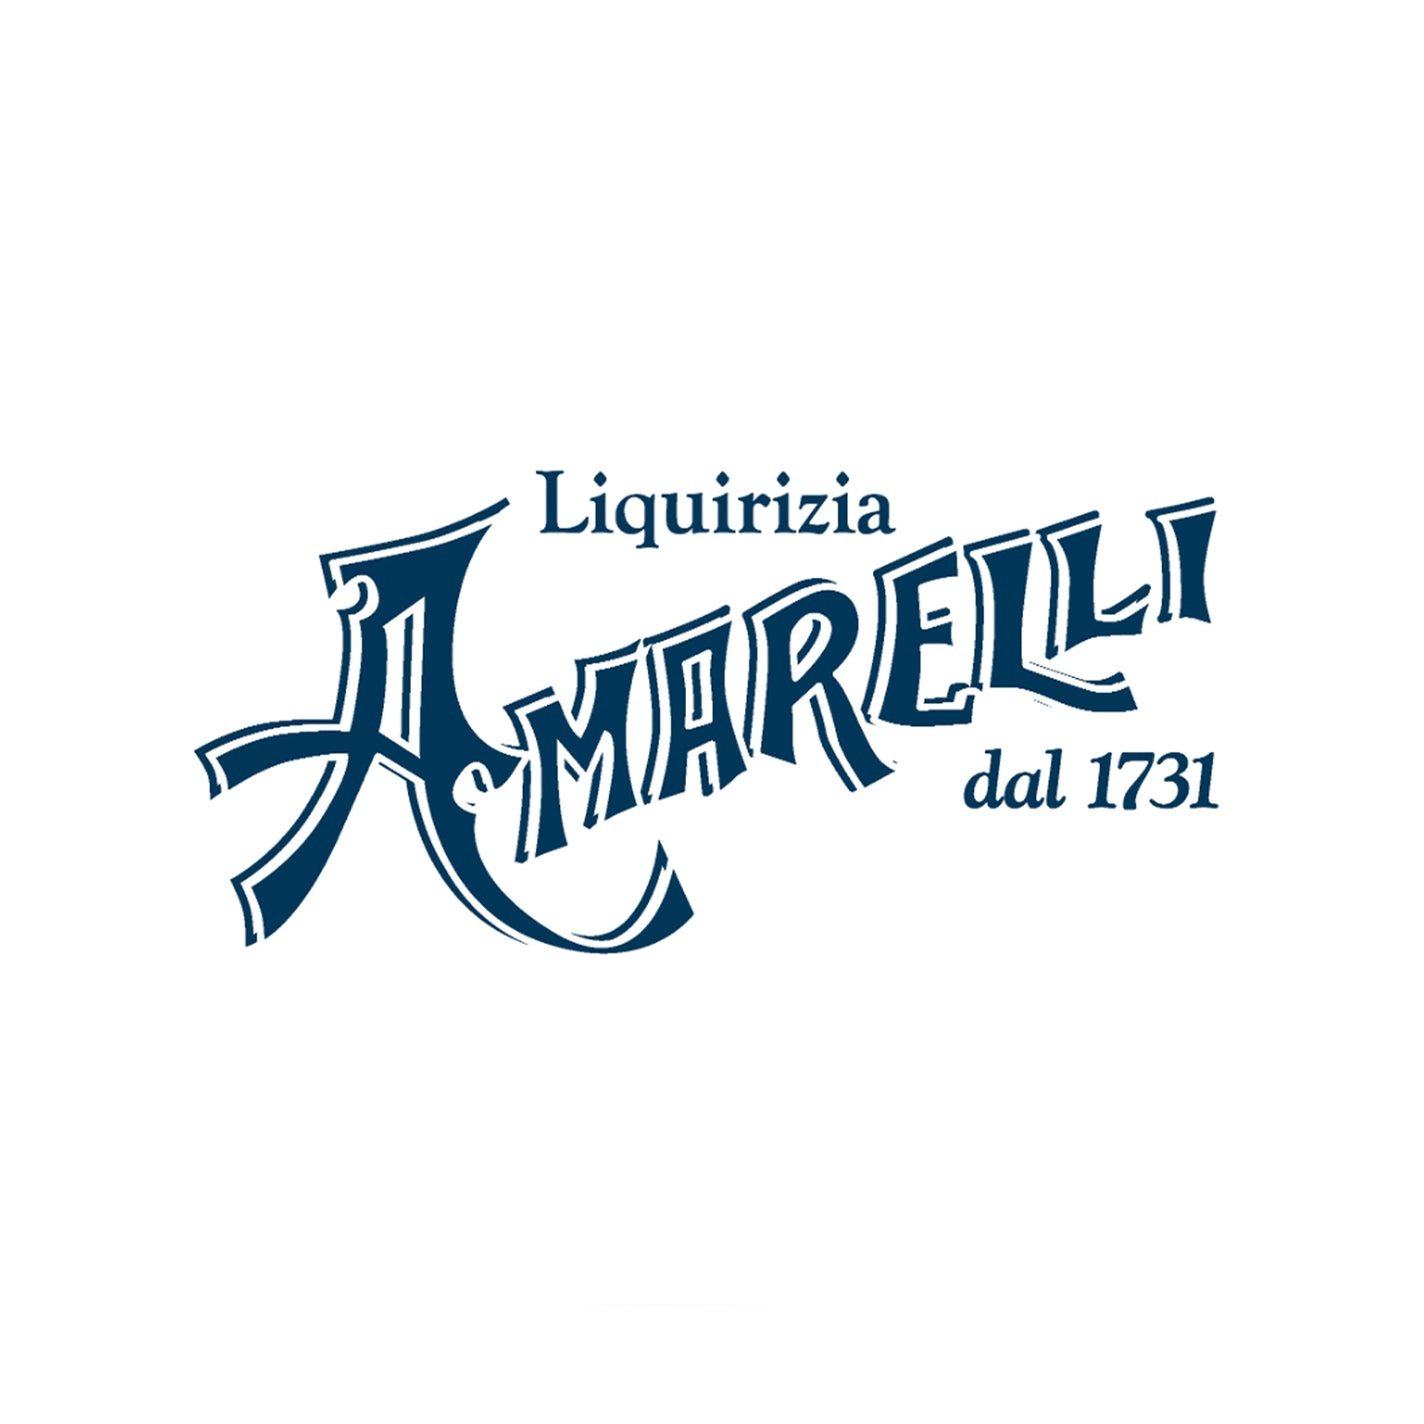 Amarelli Medaglie Liquorice (Sky)- 40g